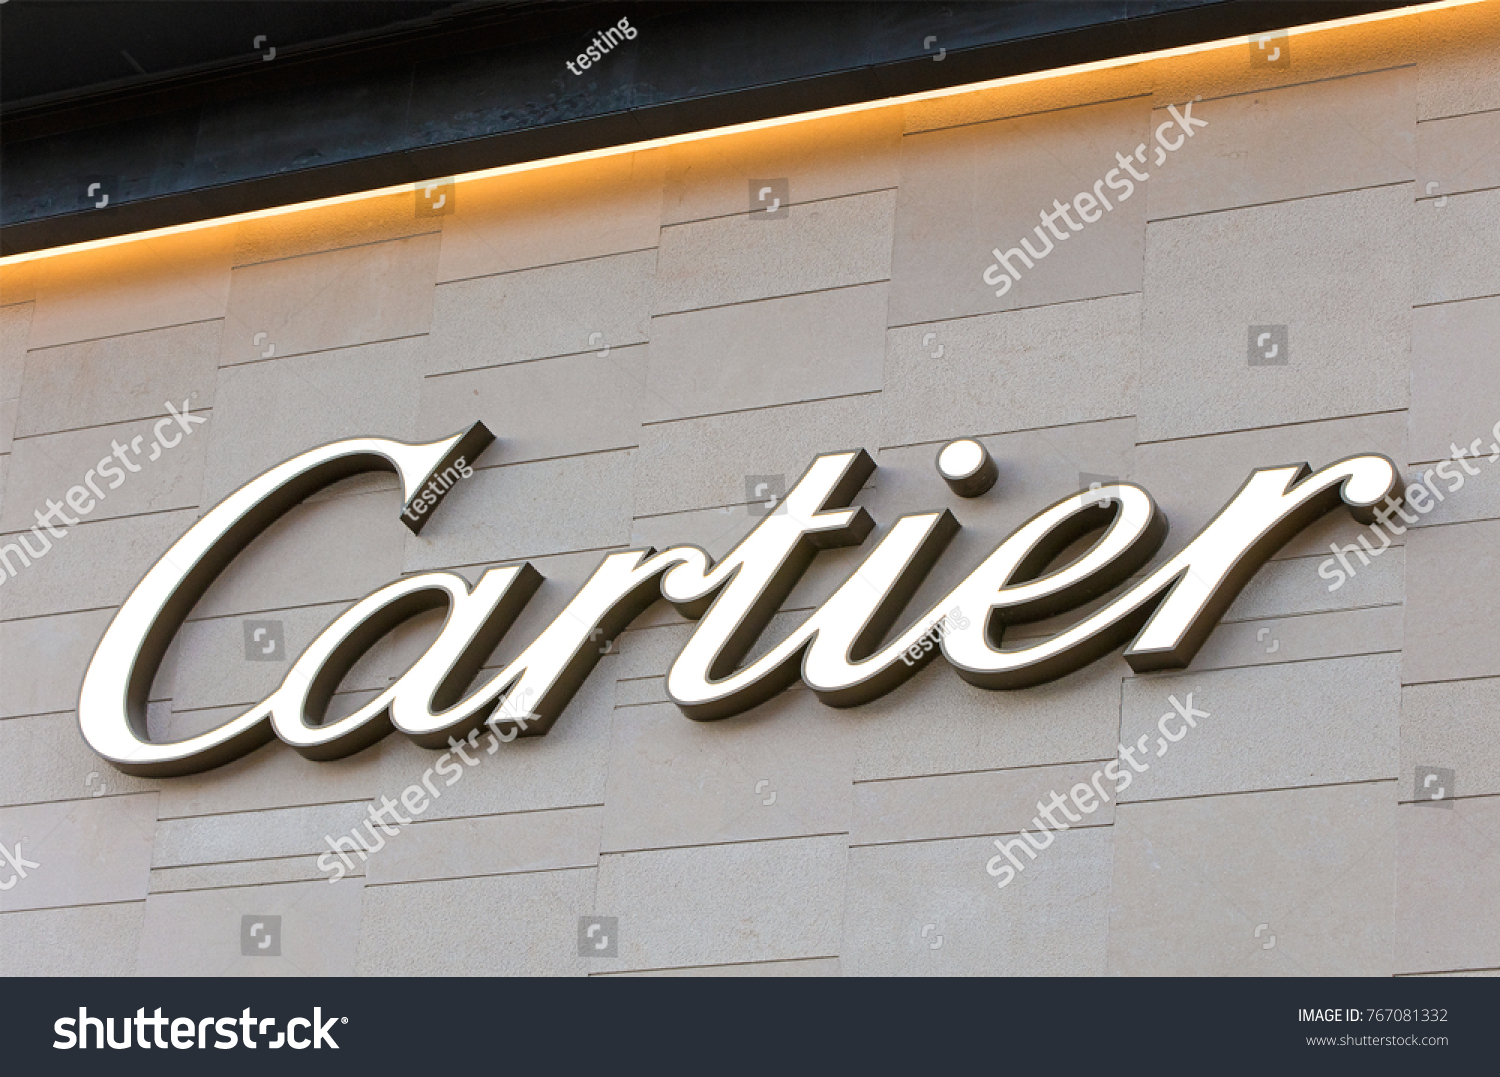 cartier shops beijing